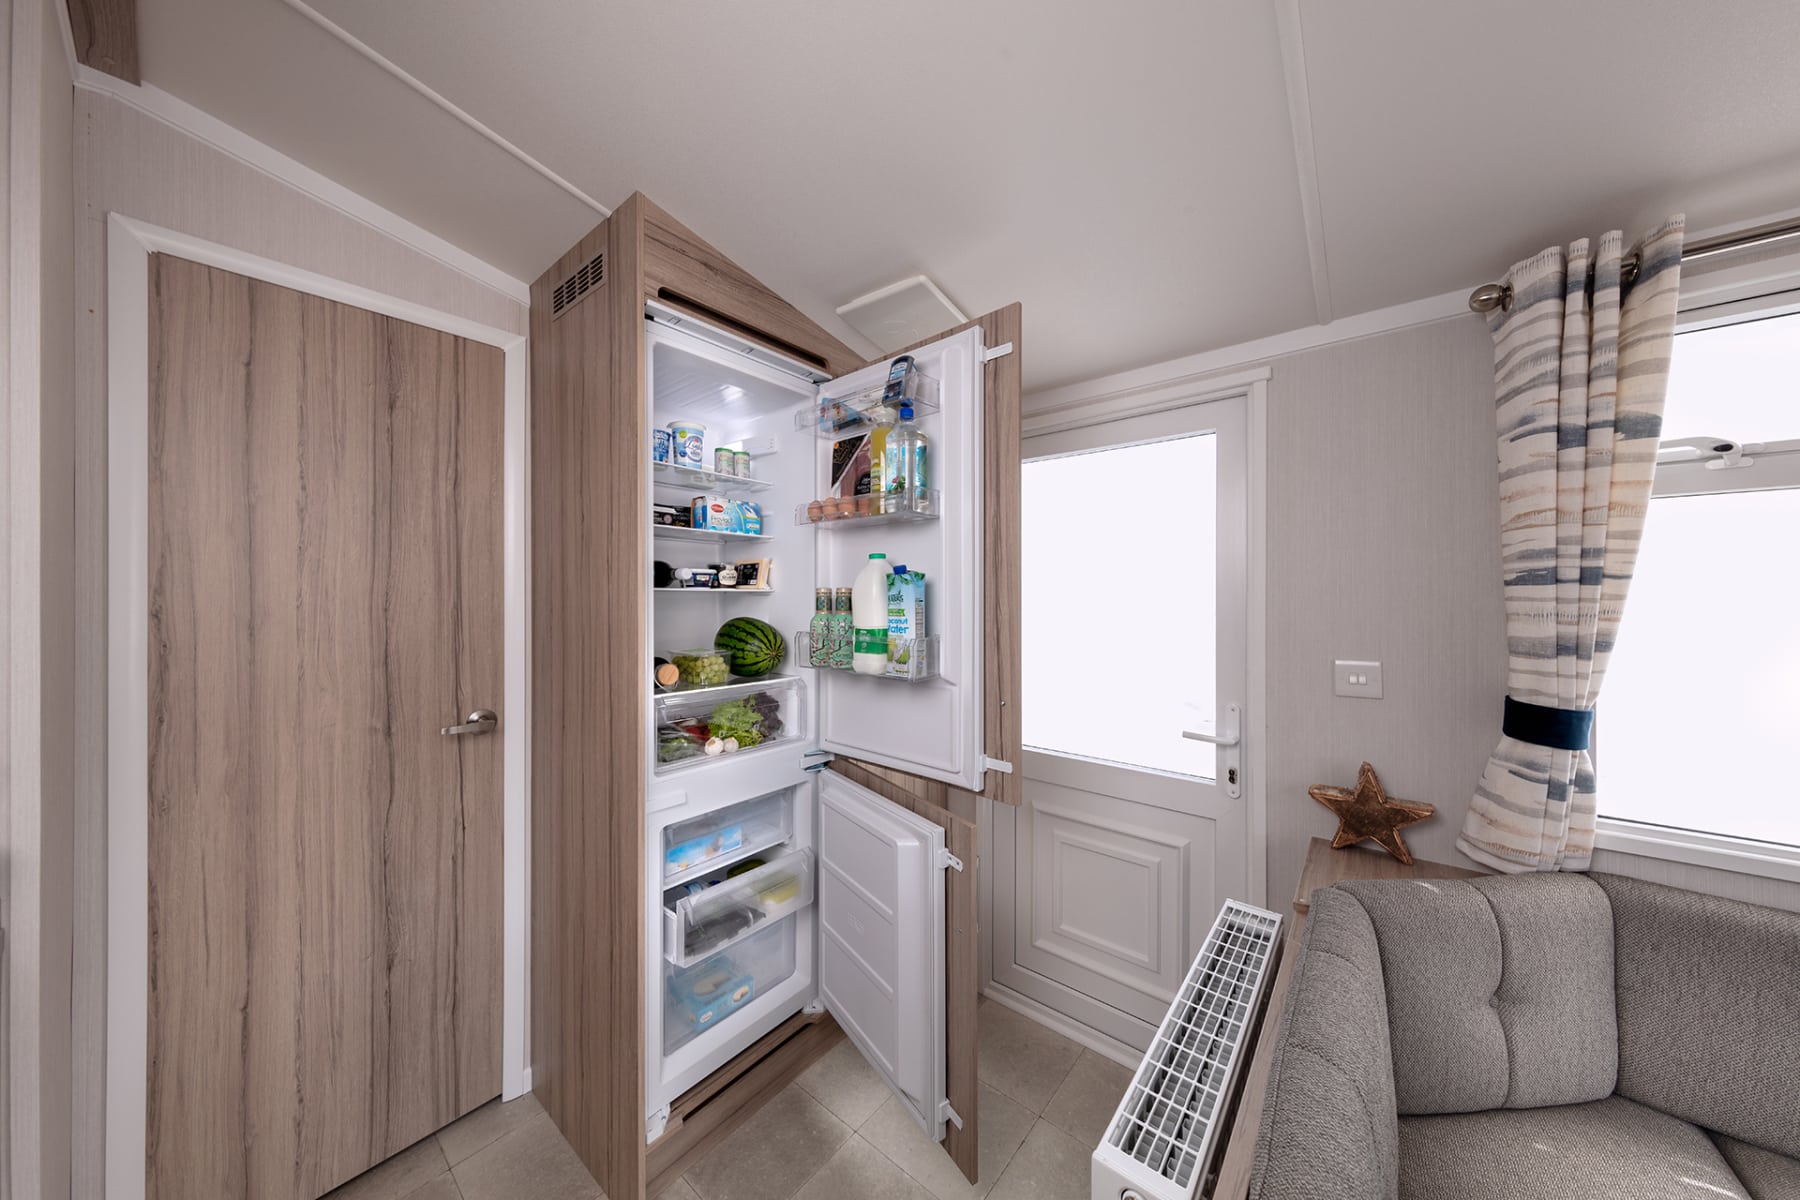 int-loire-35-x-12-2b-integrated-fridge-freezer-web